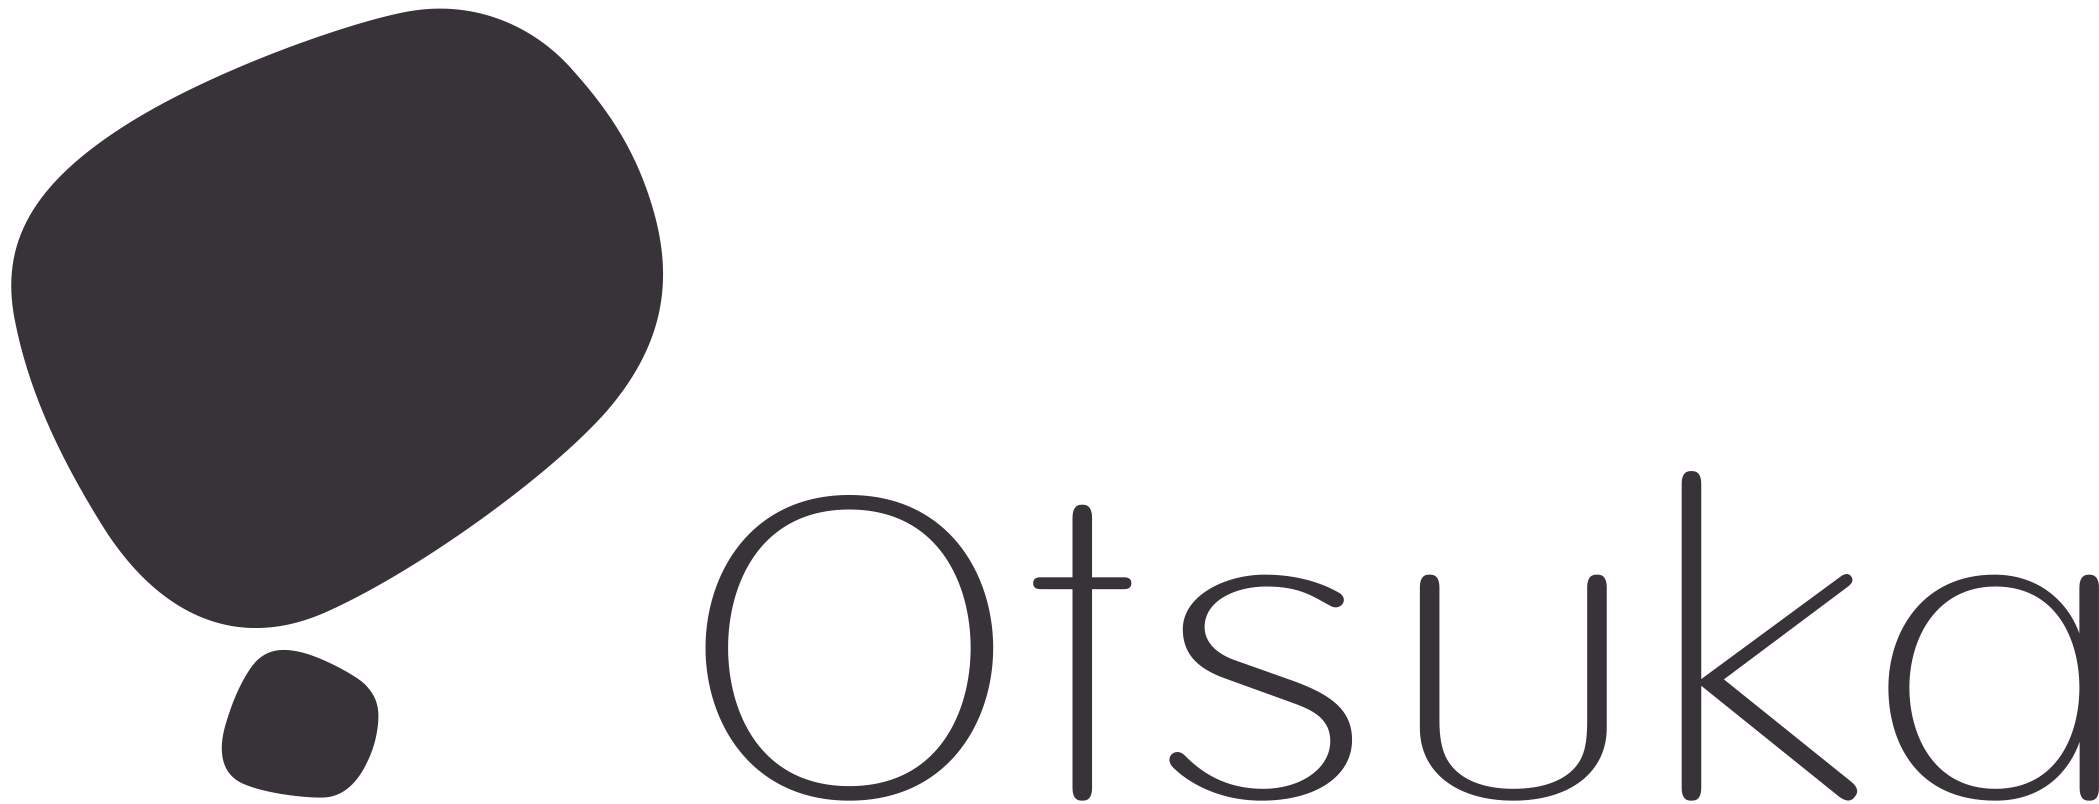 Otsuka logo